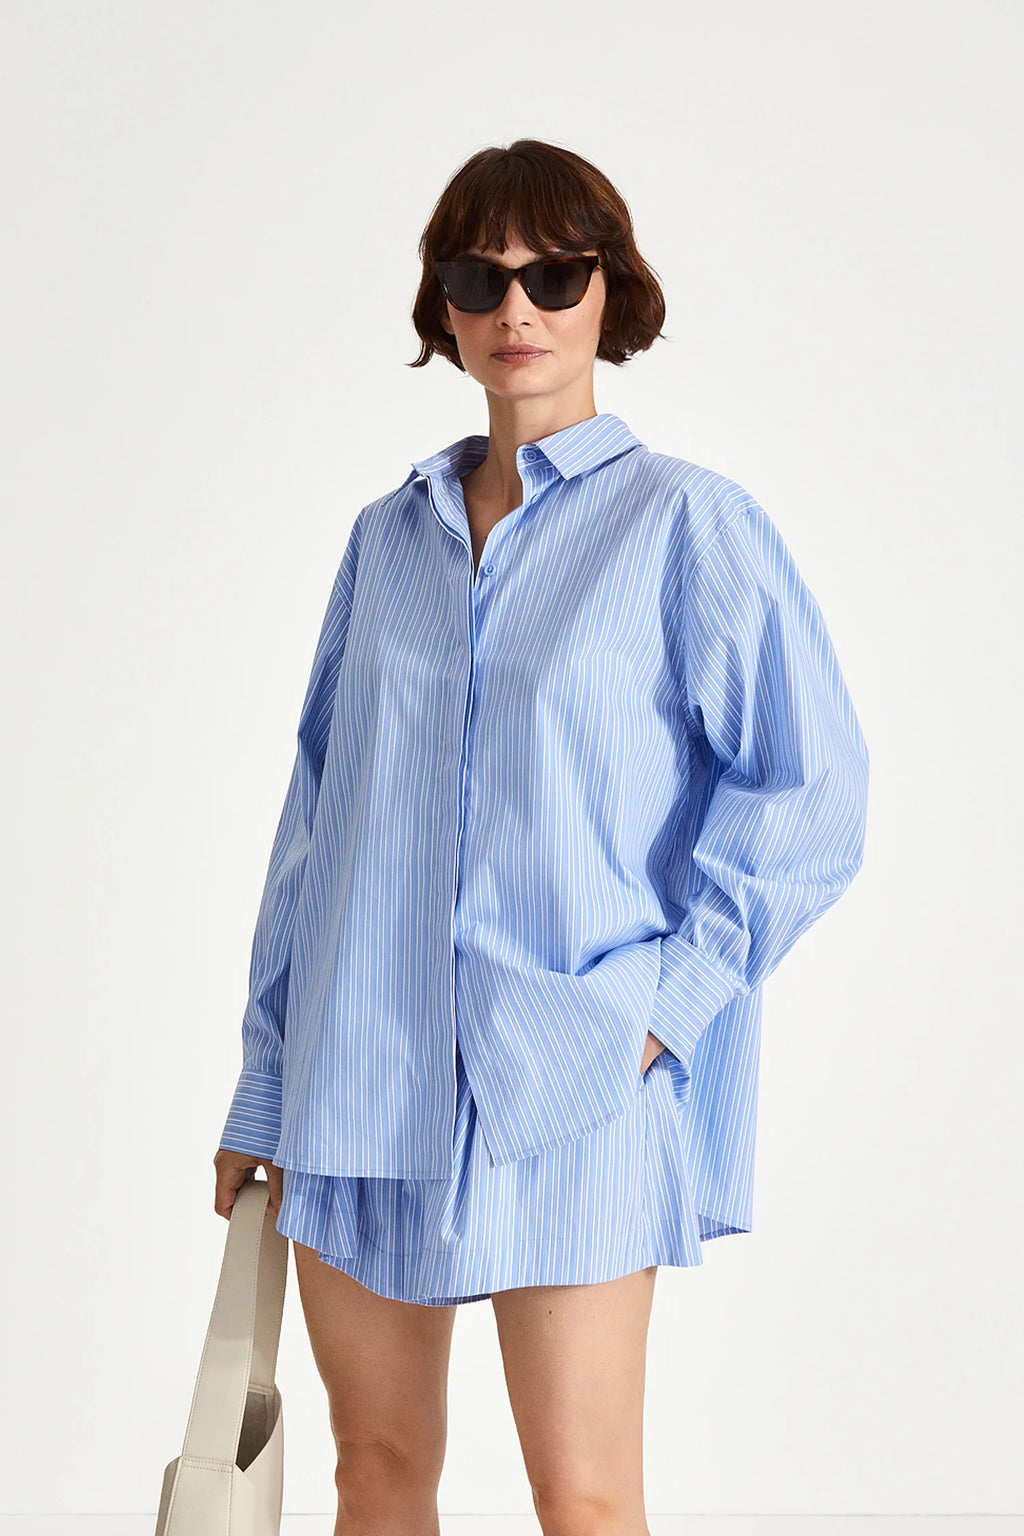 Stylein Jeanne Shirt Blue Striped